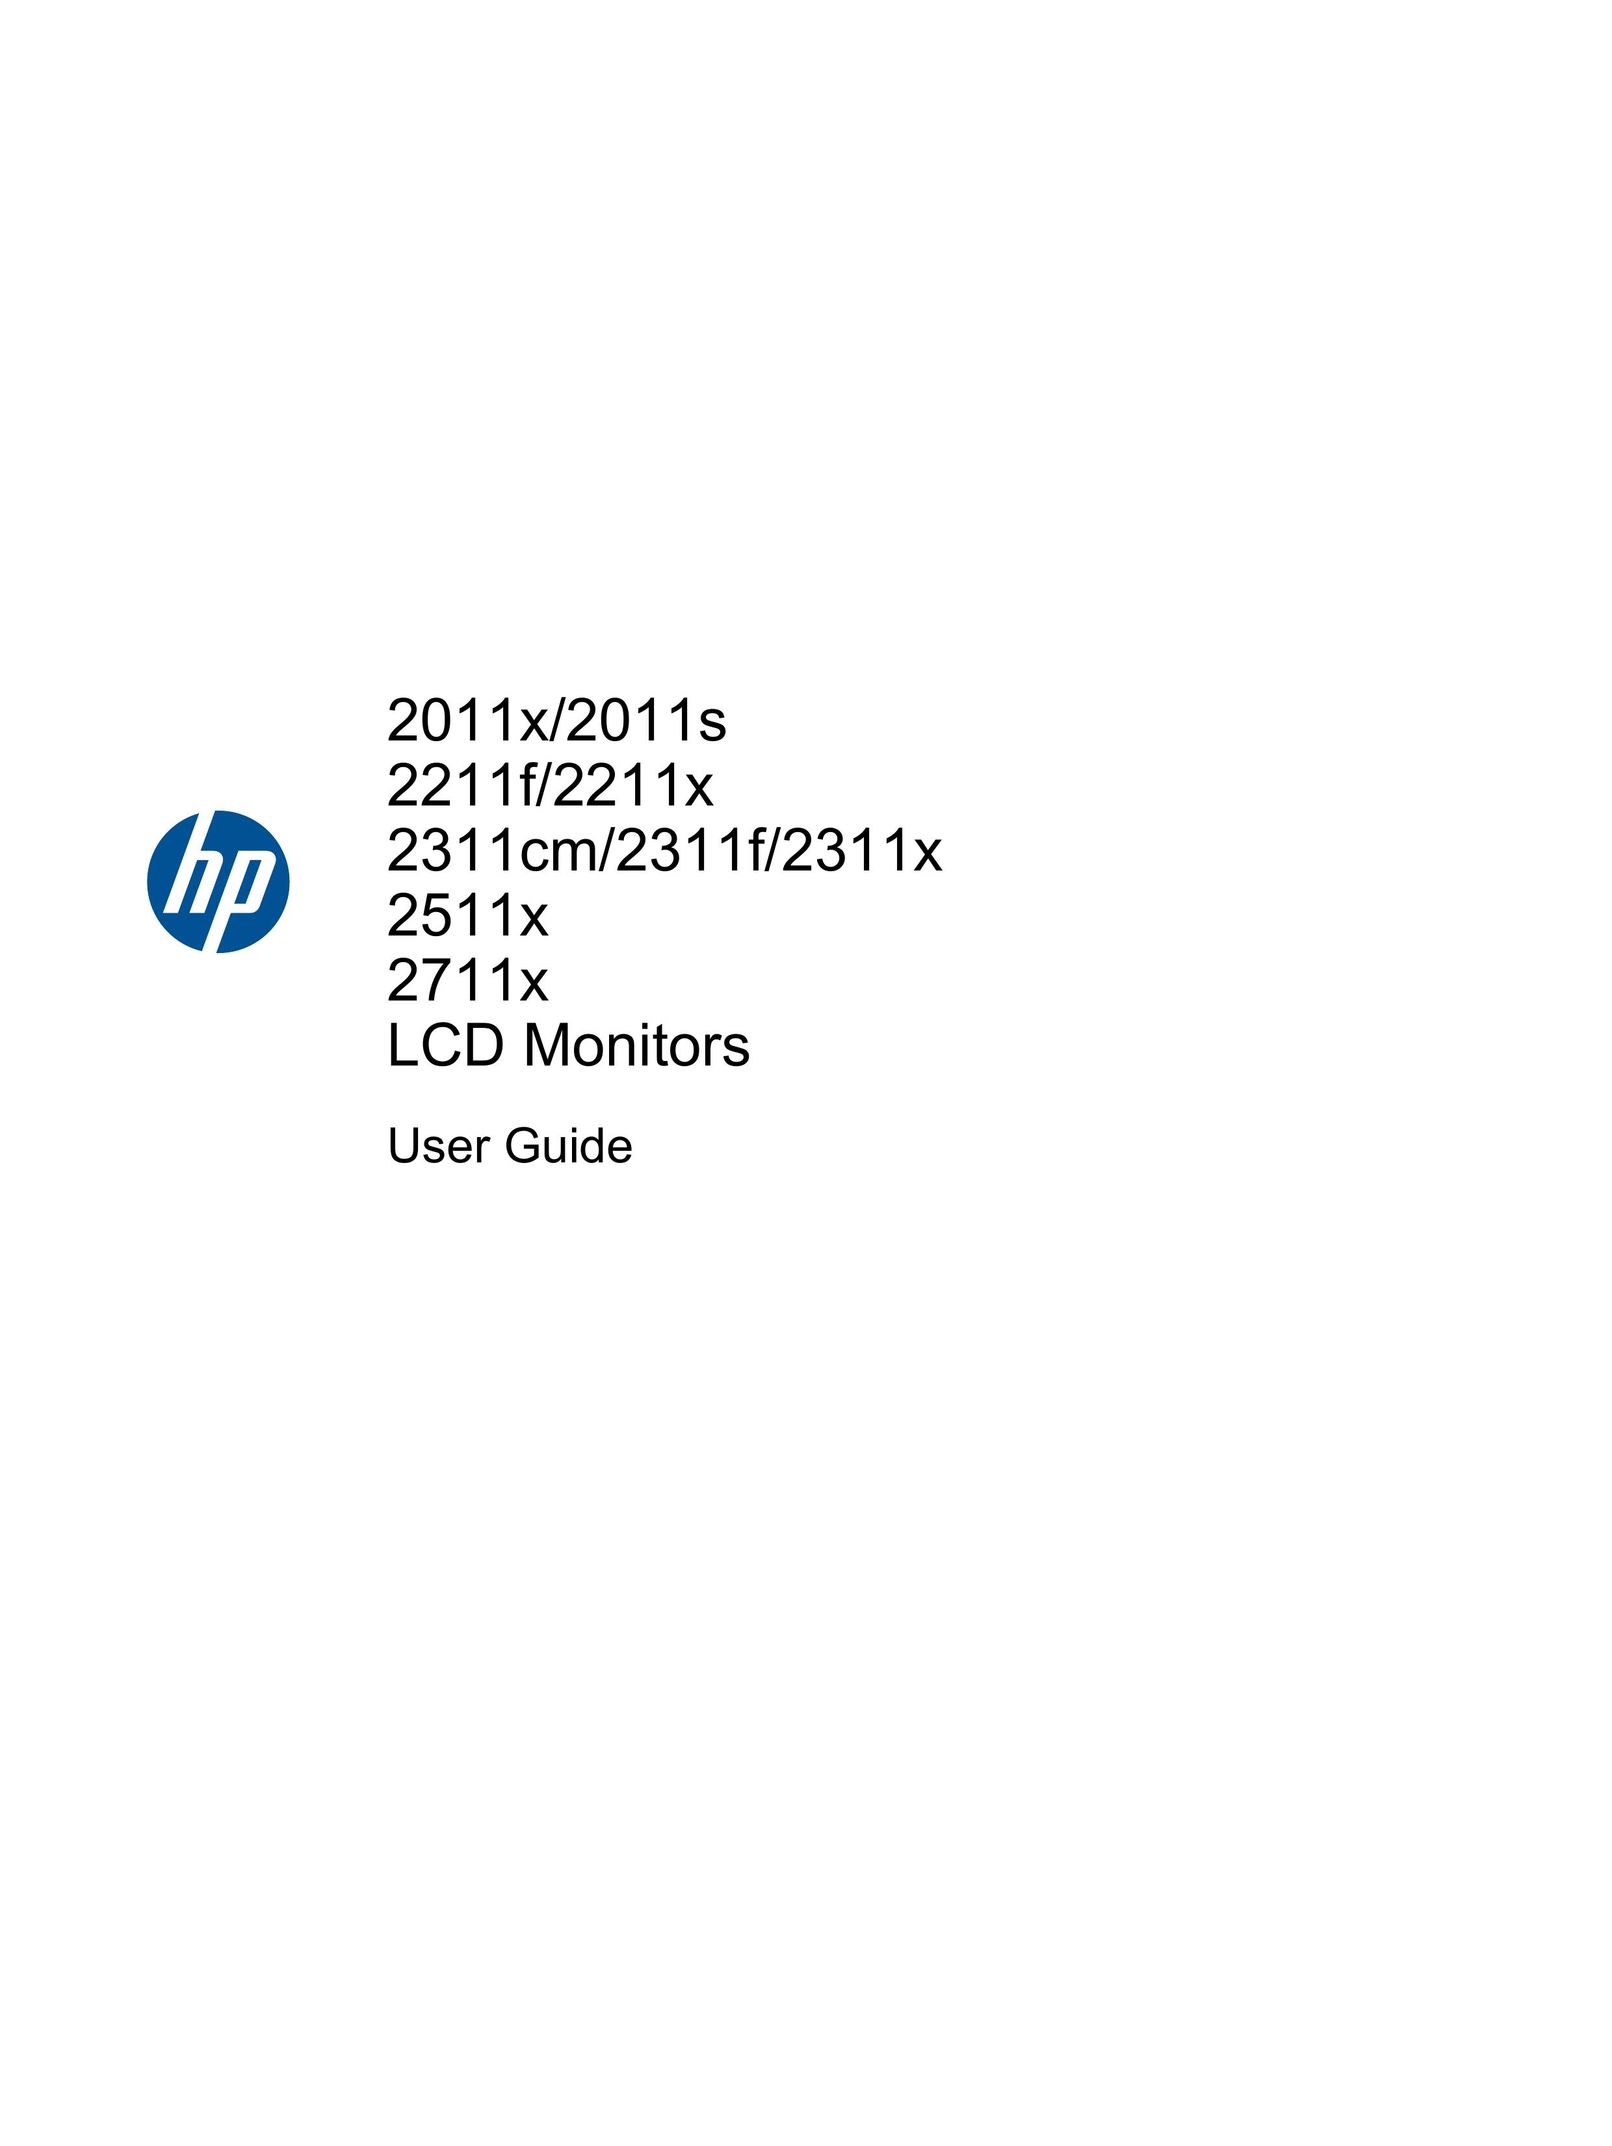 HP (Hewlett-Packard) 2511x Car Video System User Manual